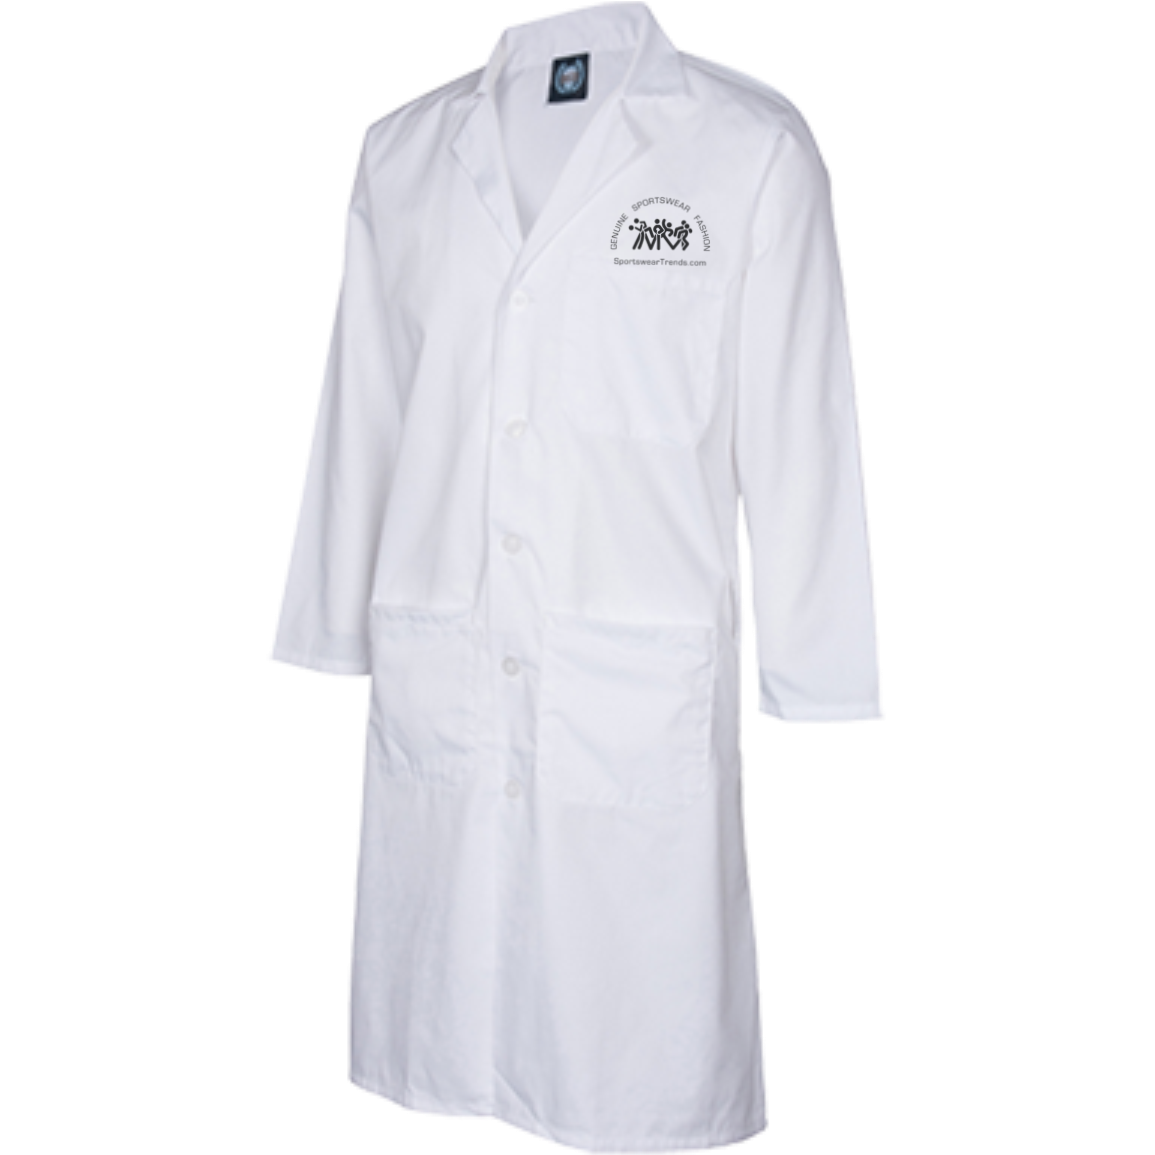 google clipart lab coat